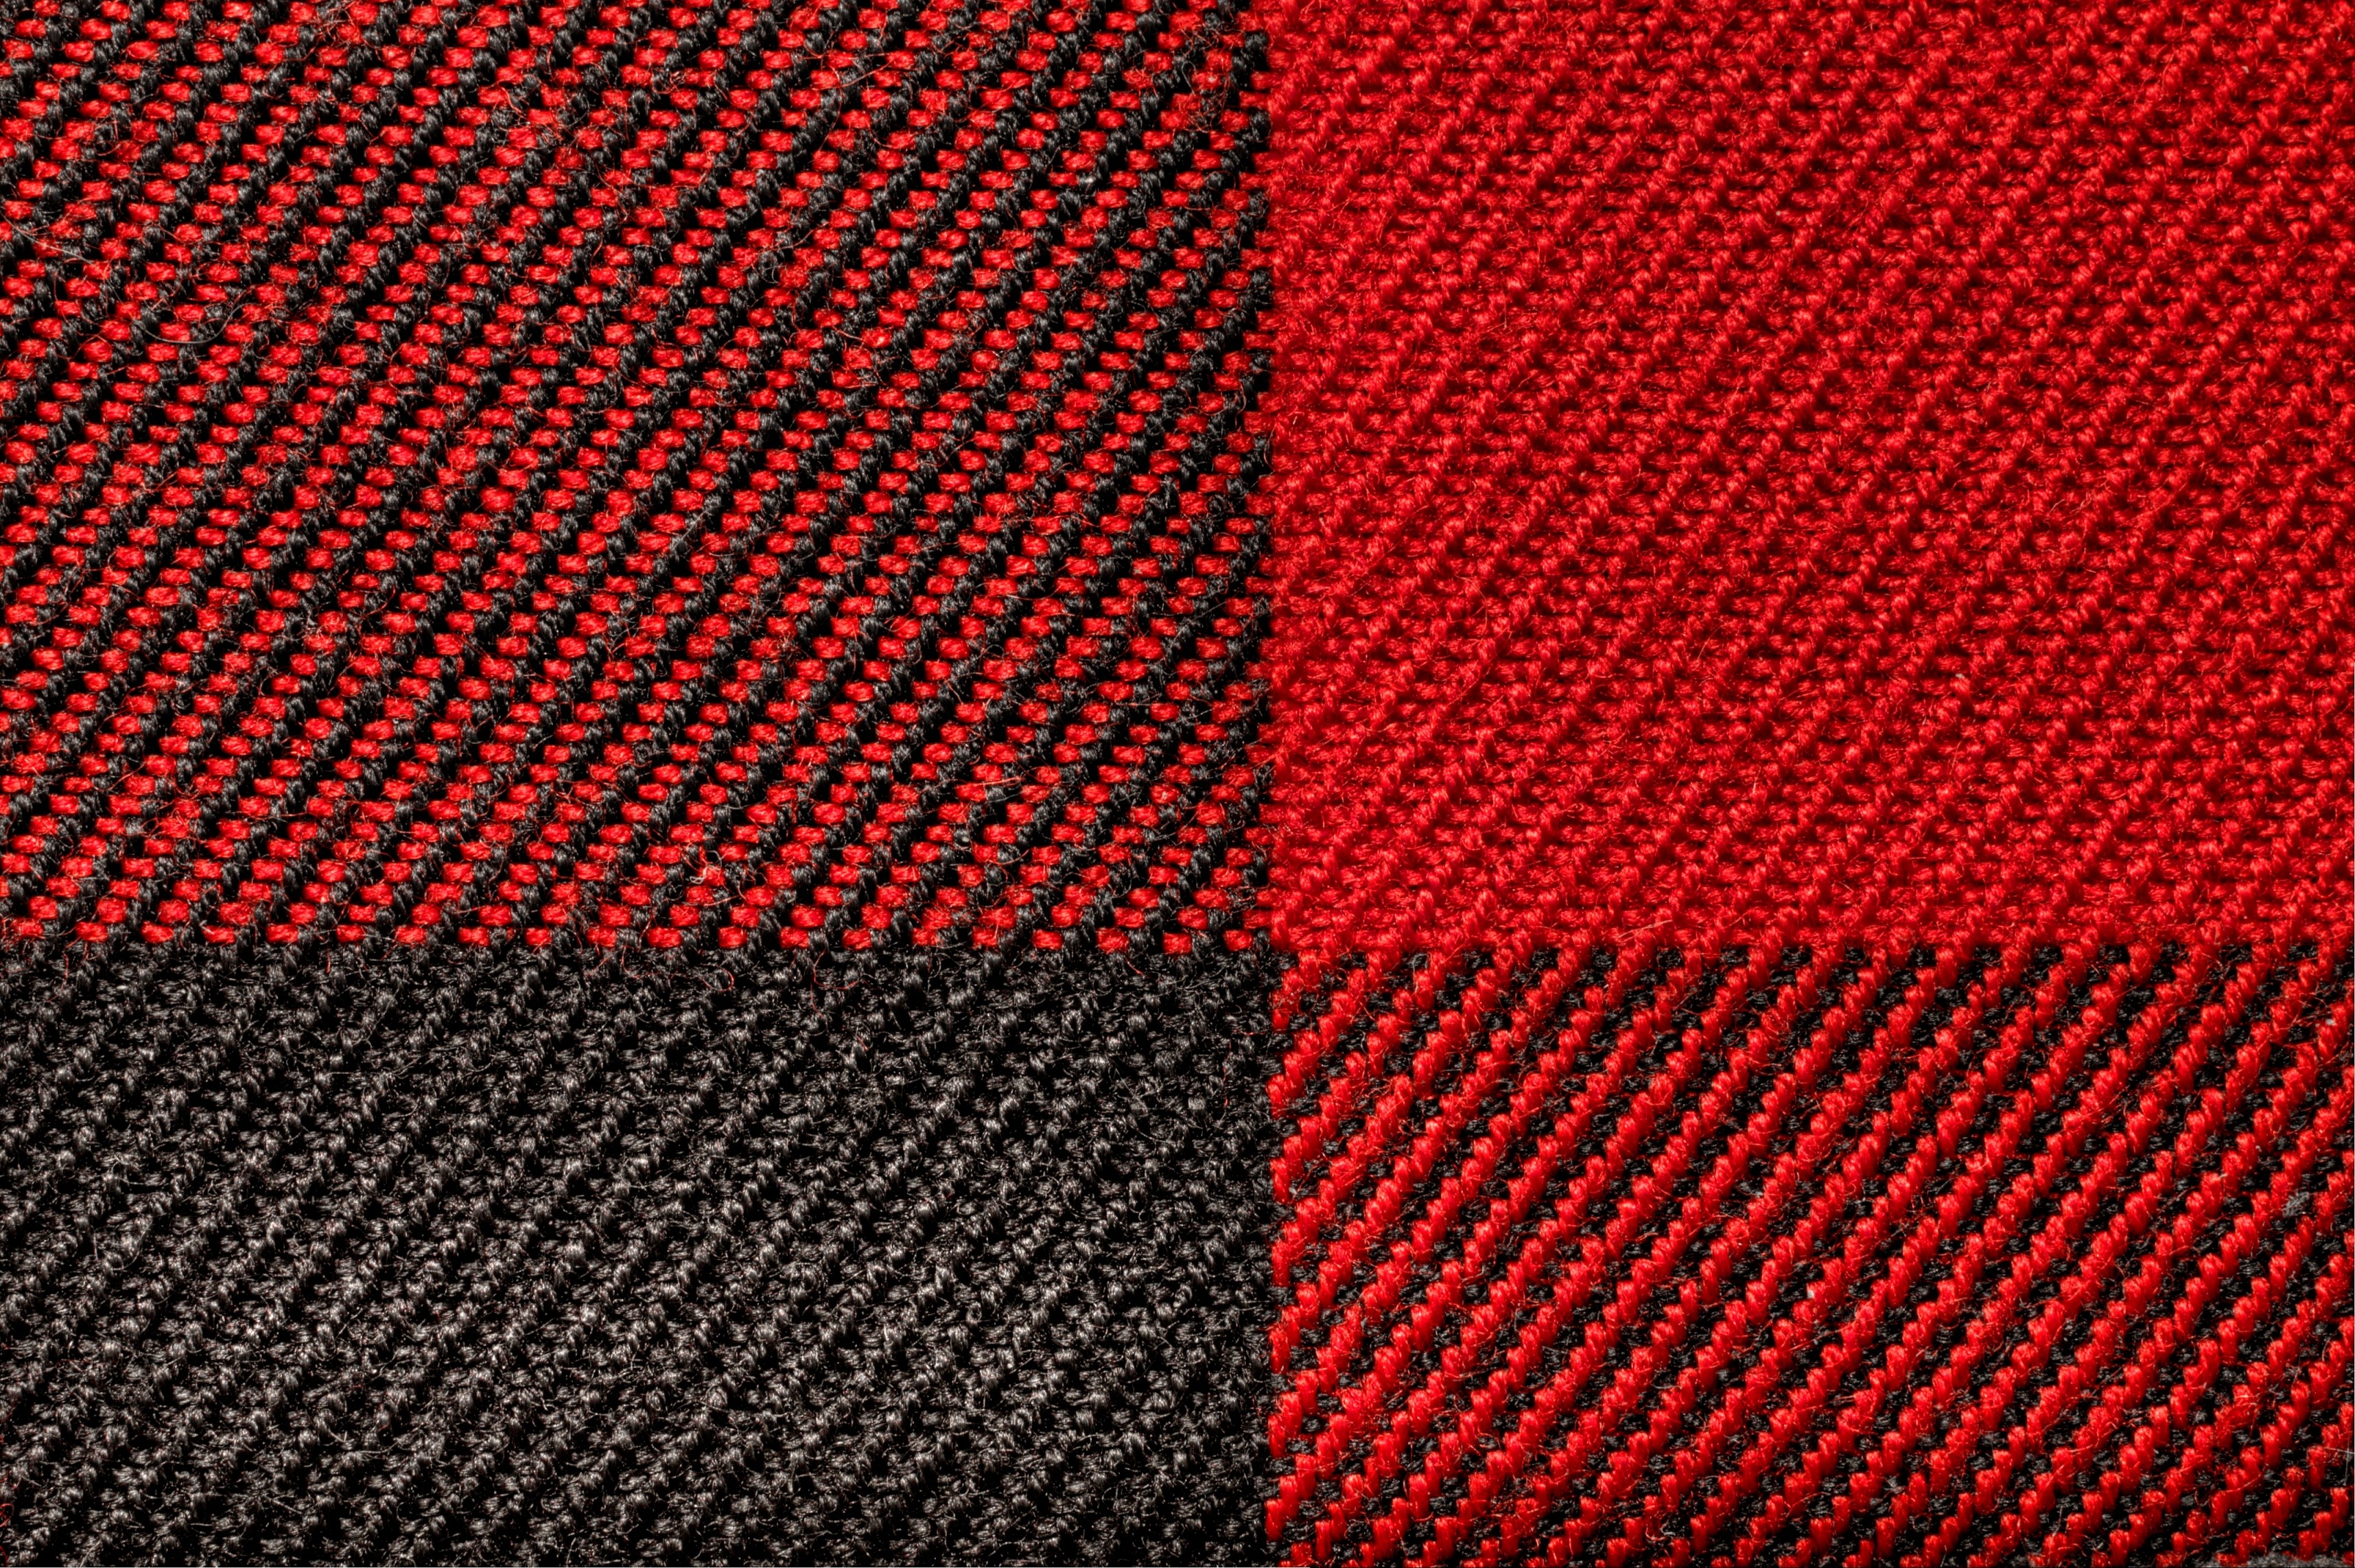 Entityculling fabric. Текстура ткани. Текстурированная ткань. Тканевая текстура. Красная ткань.